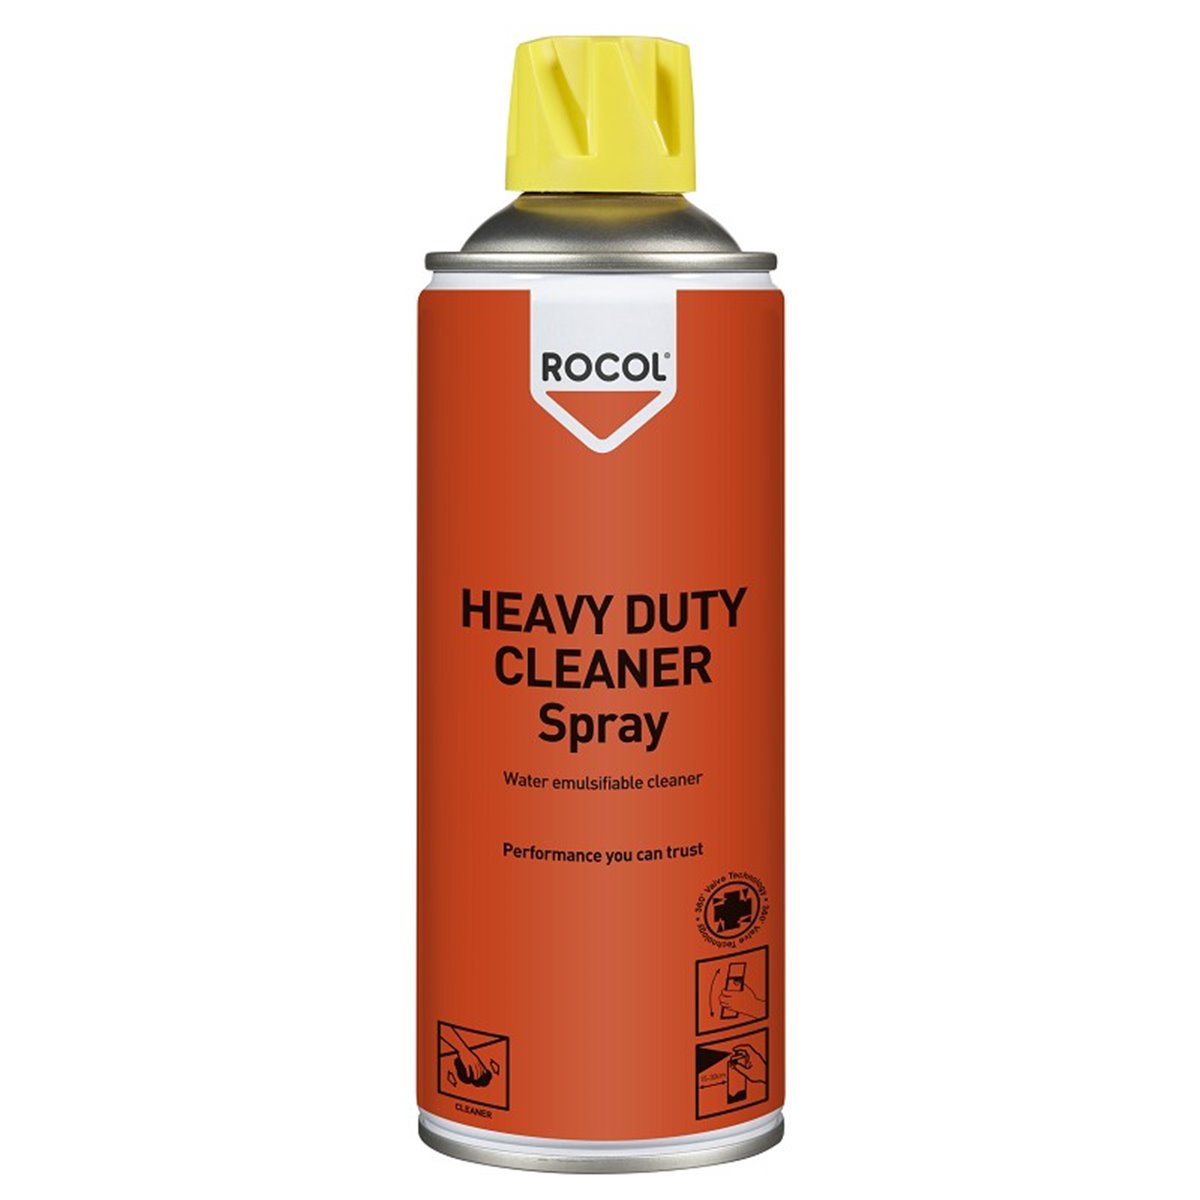 HEAVY DUTY CLEANER Spray Rocol 300ml RS34011